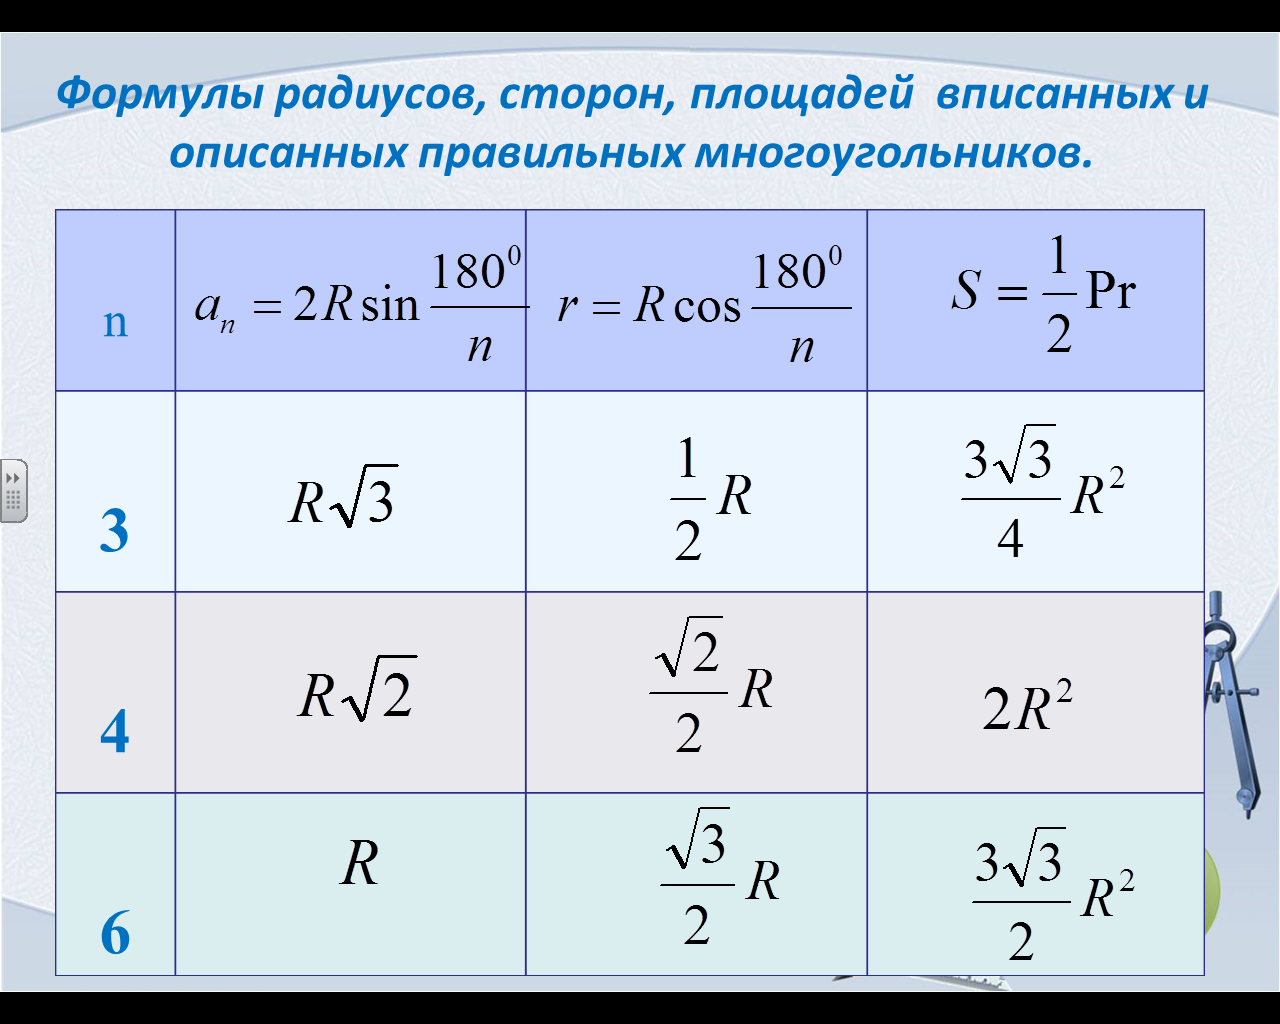 Формула правильных решений. Формула правильных n-Угольников. Формула правильного n угольника. Правильные многоугольники формулы 9 класс таблица. Формулы для правильных многоугольников 9 класс геометрия.